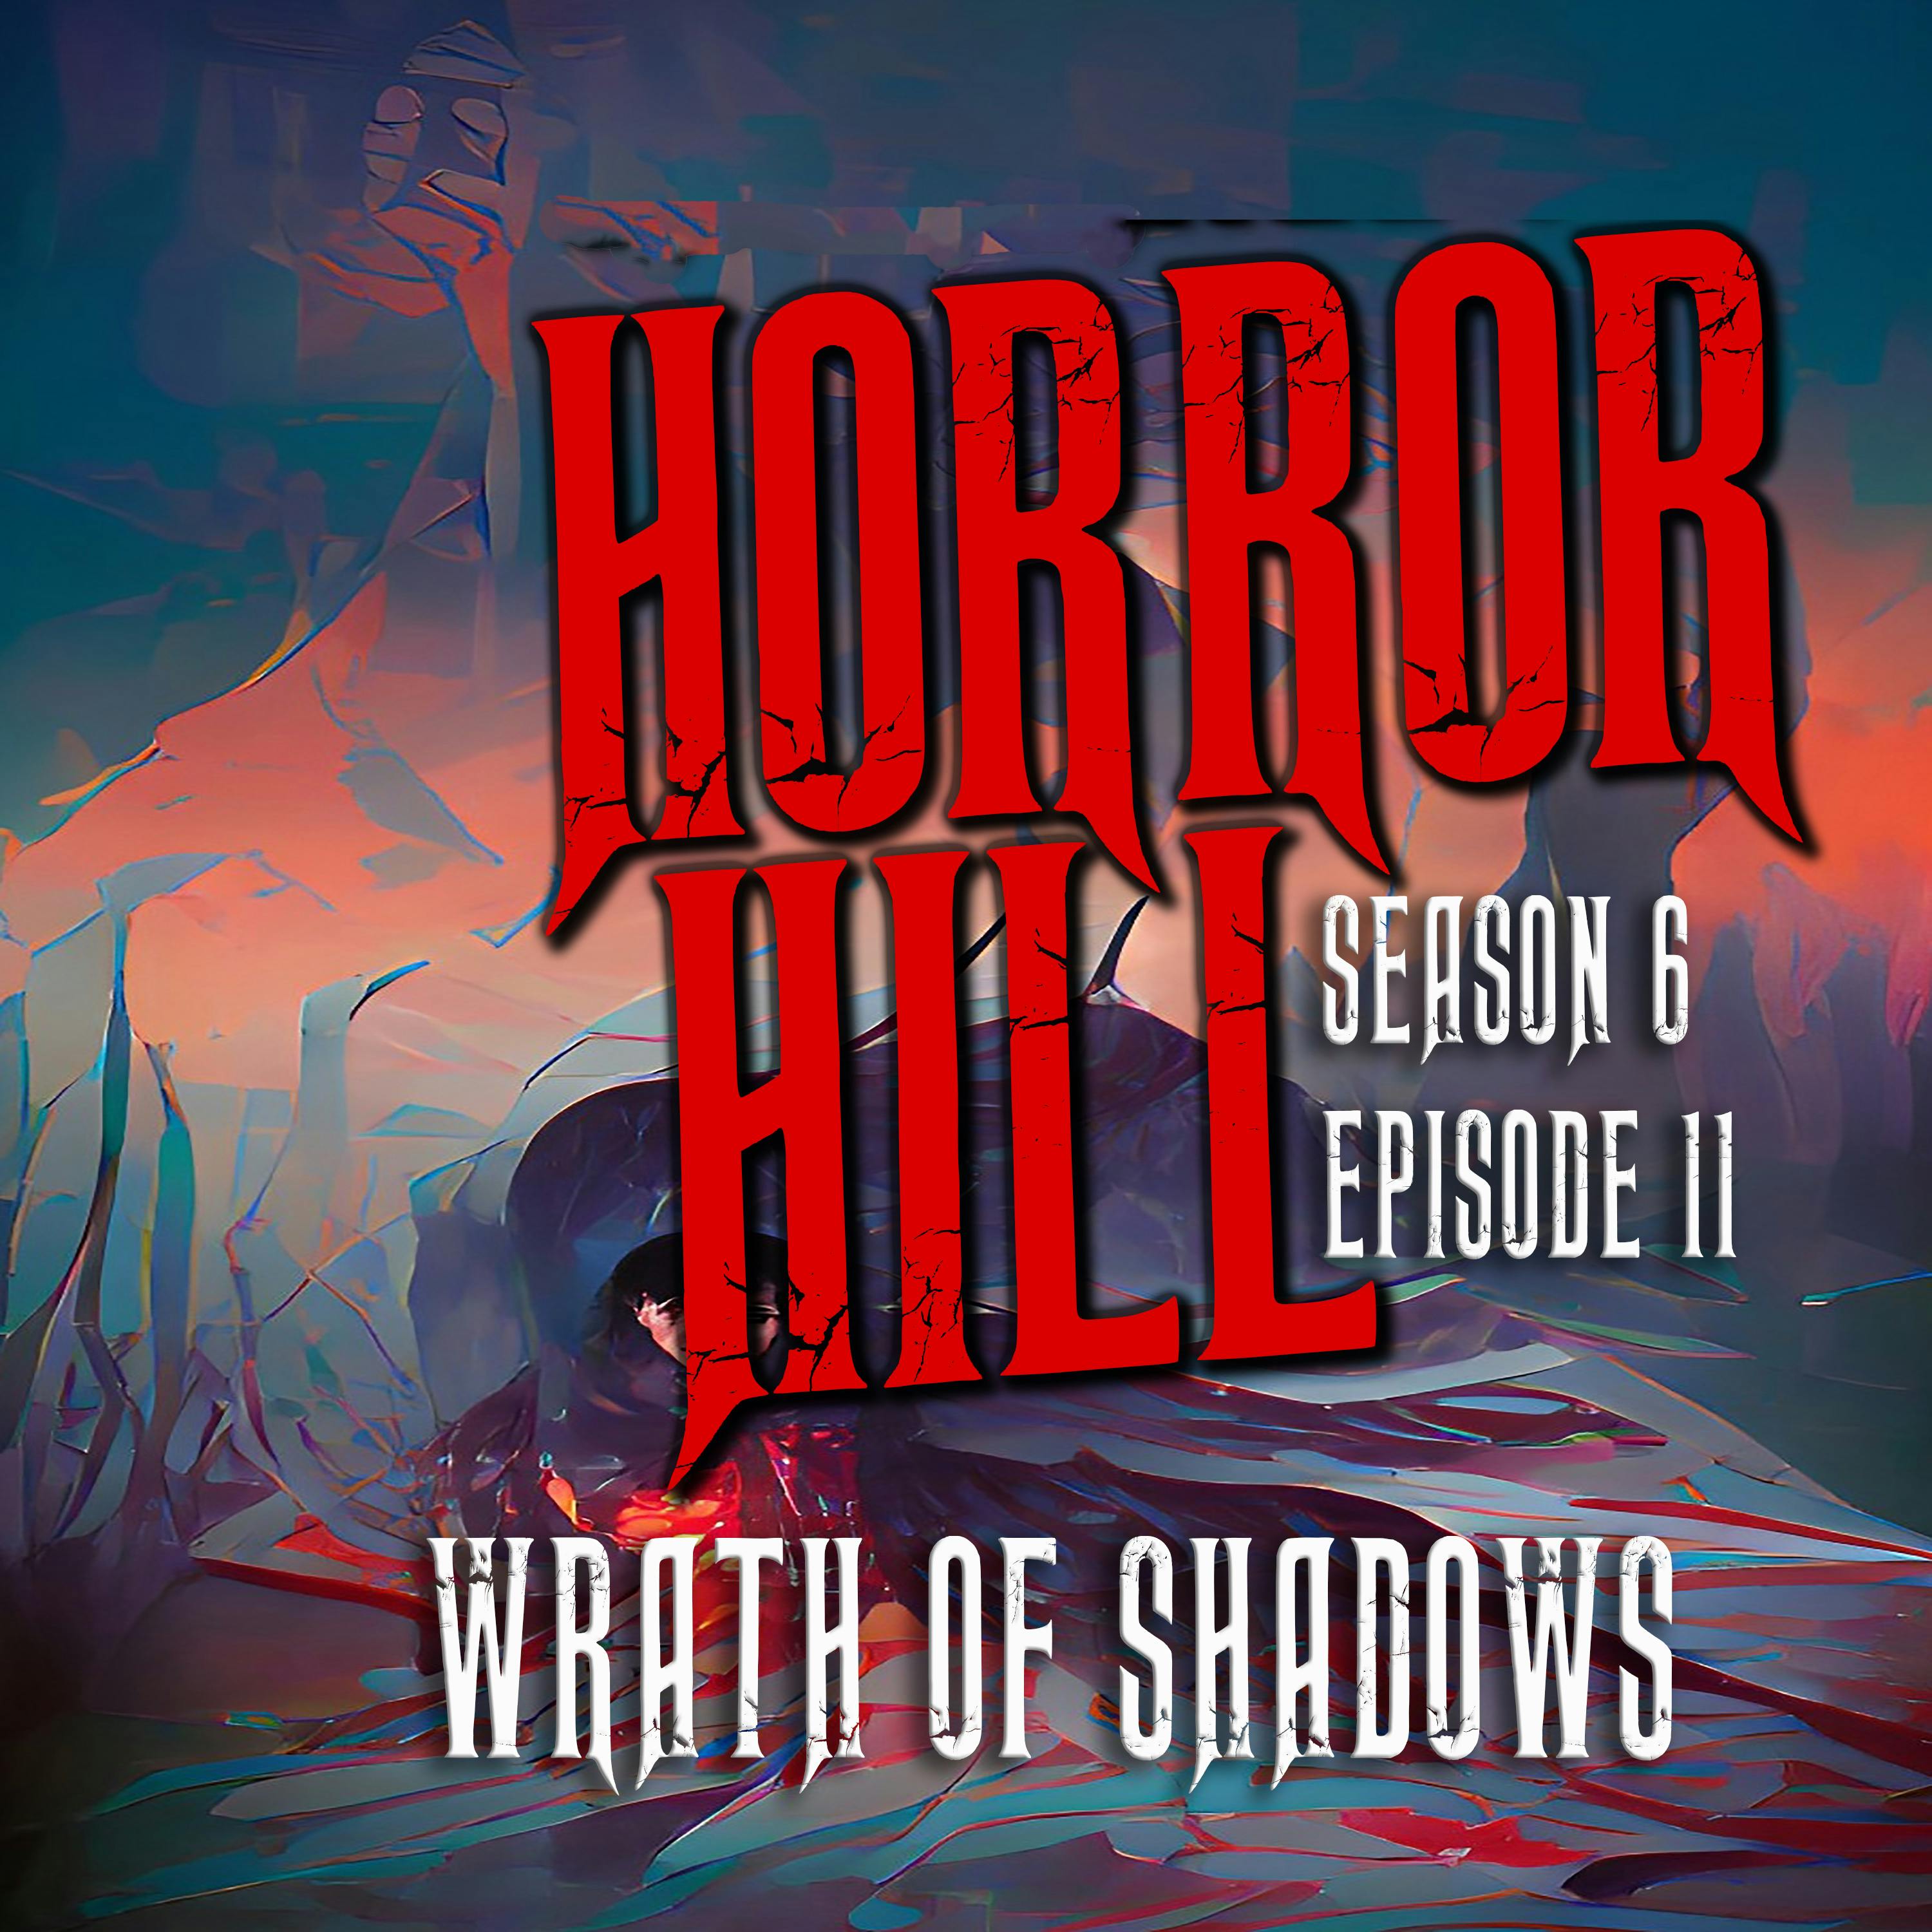 S6E11 - "Wrath of Shadows" - Horror Hill